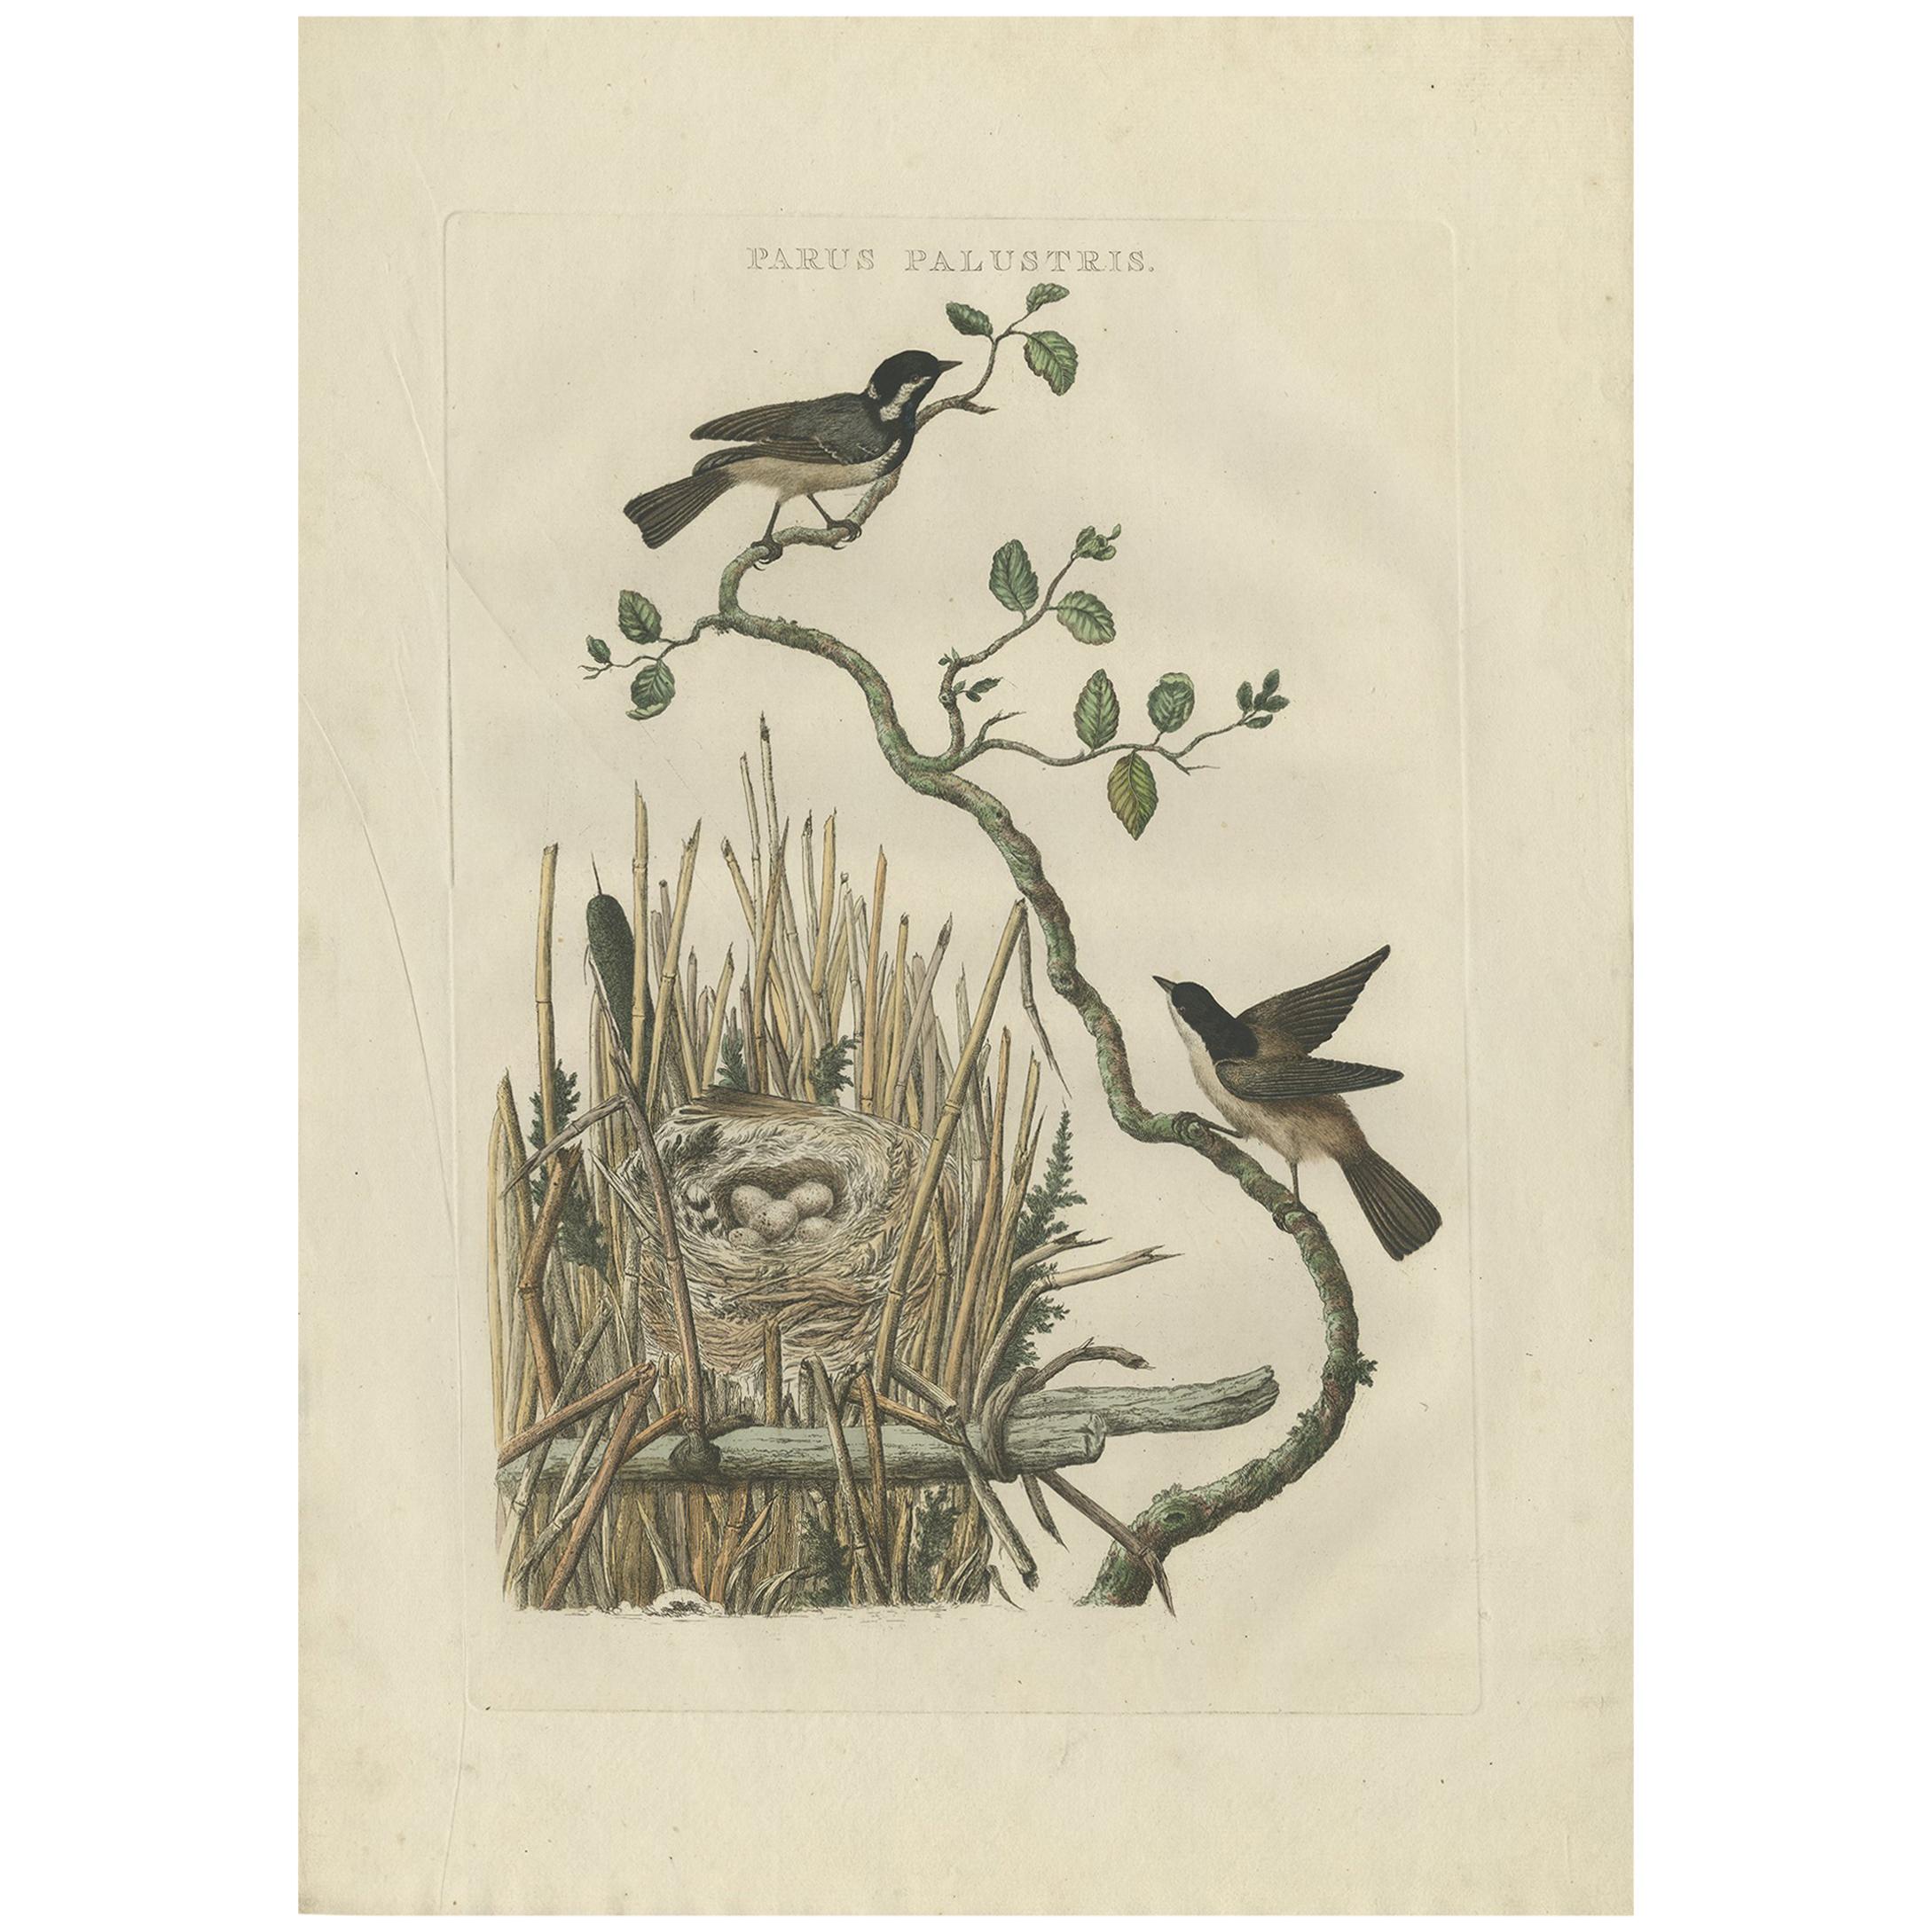 Antique Bird Print of the Marsh Tit by Sepp & Nozeman, 1770